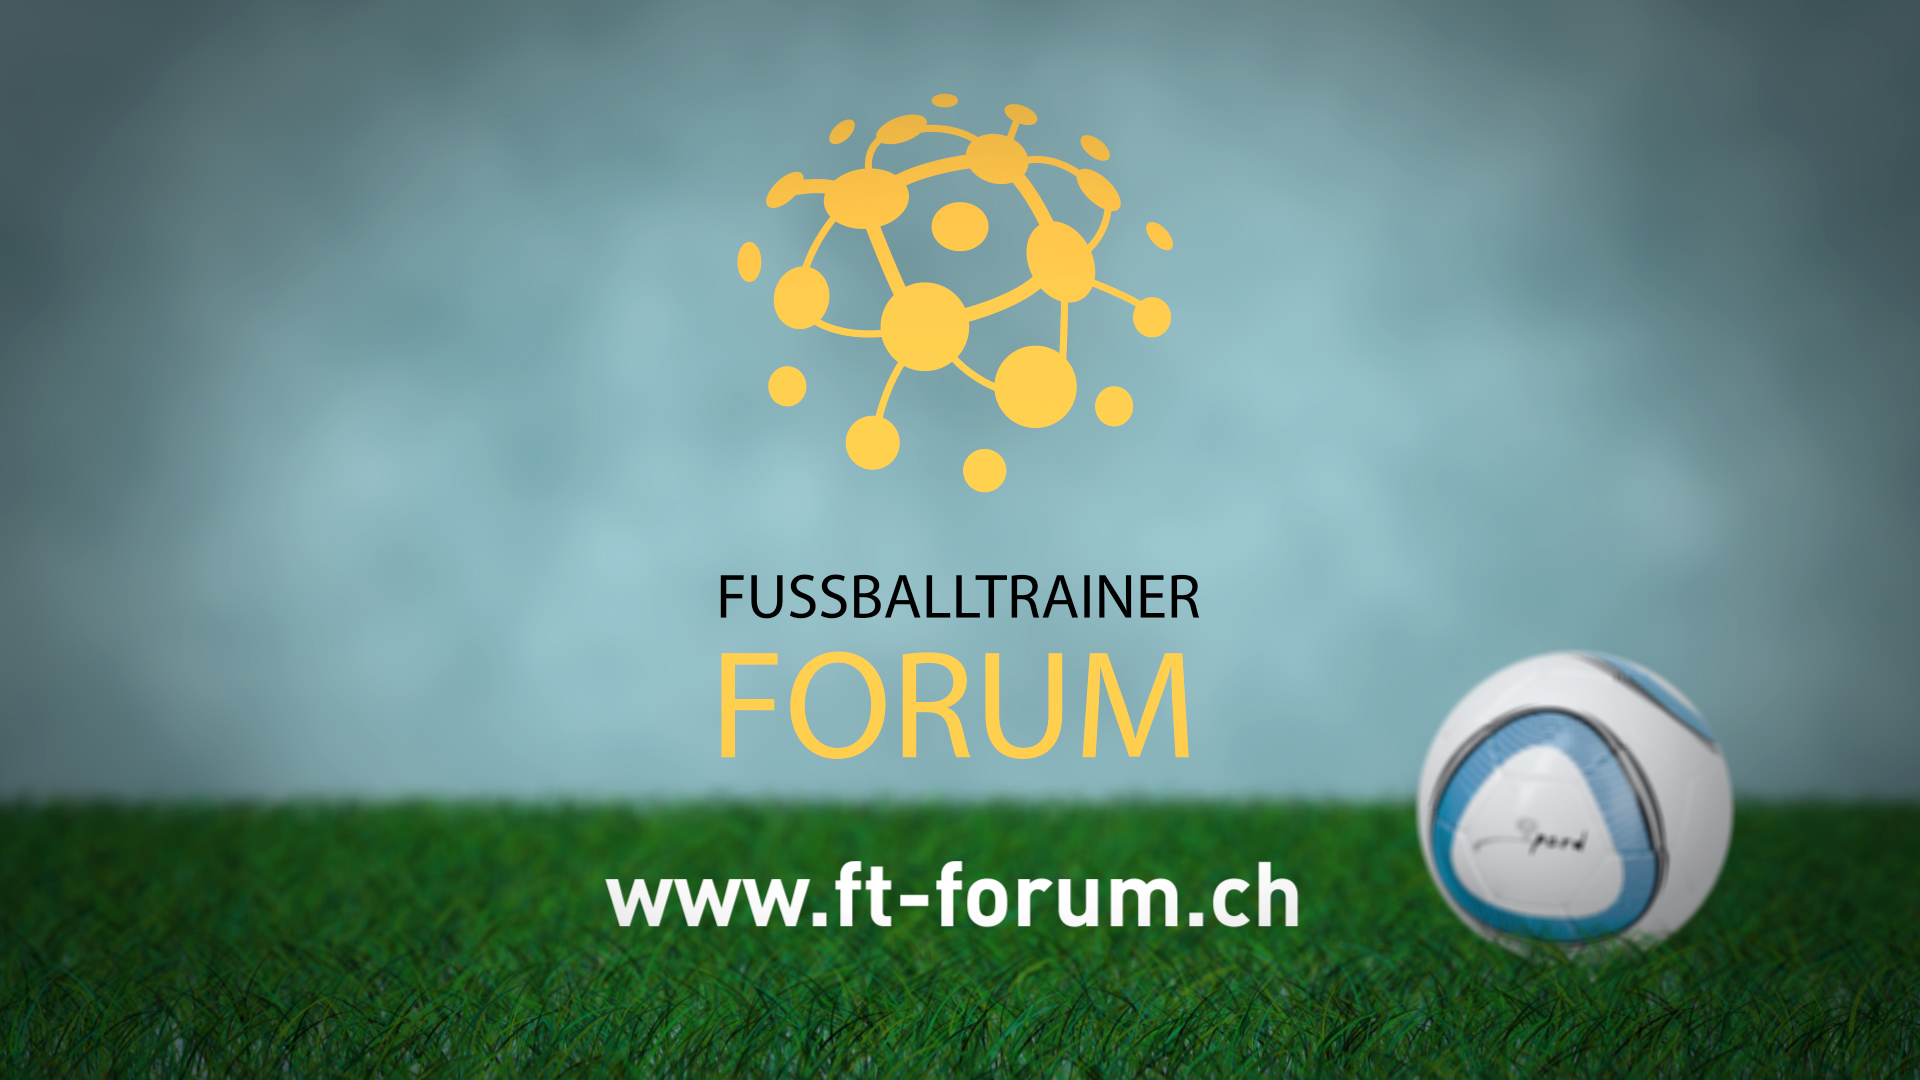 FussballtrainerForum